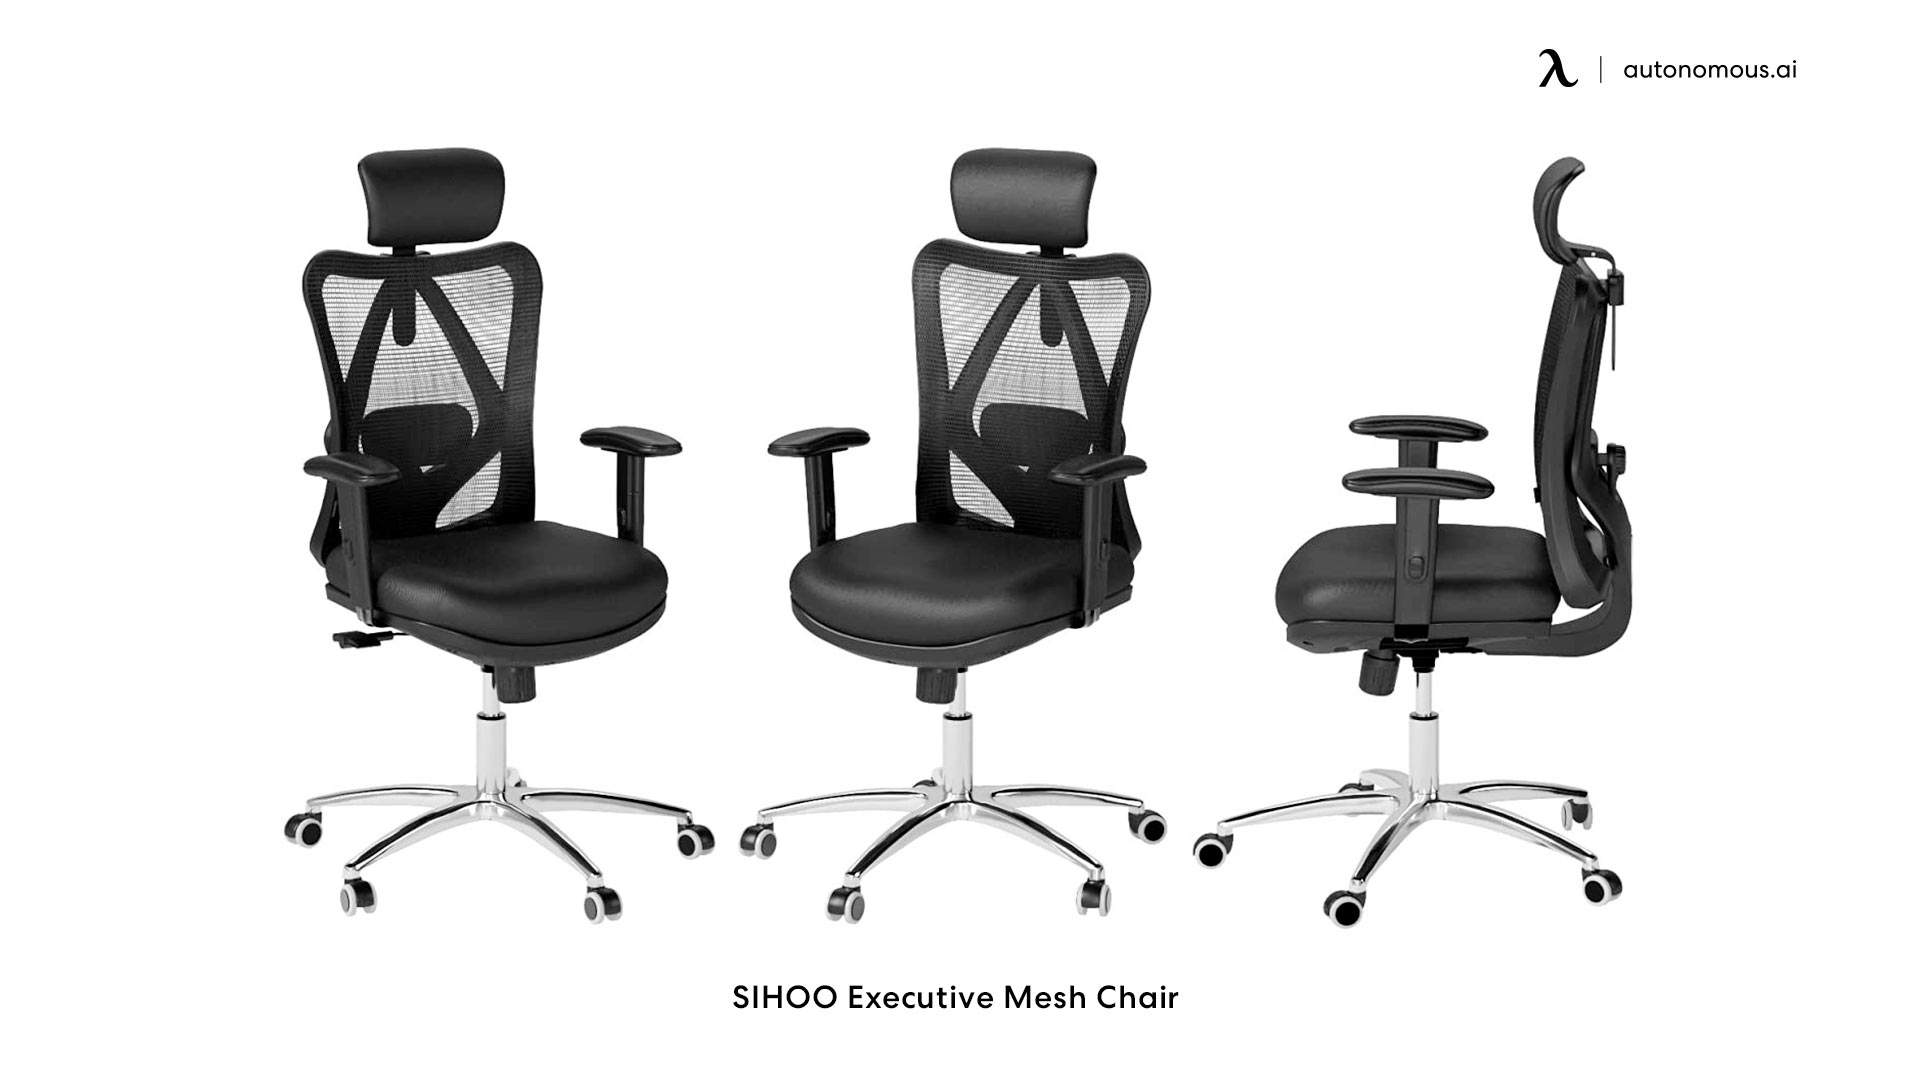 Shihoo Ergonomic mesh bottom office chair